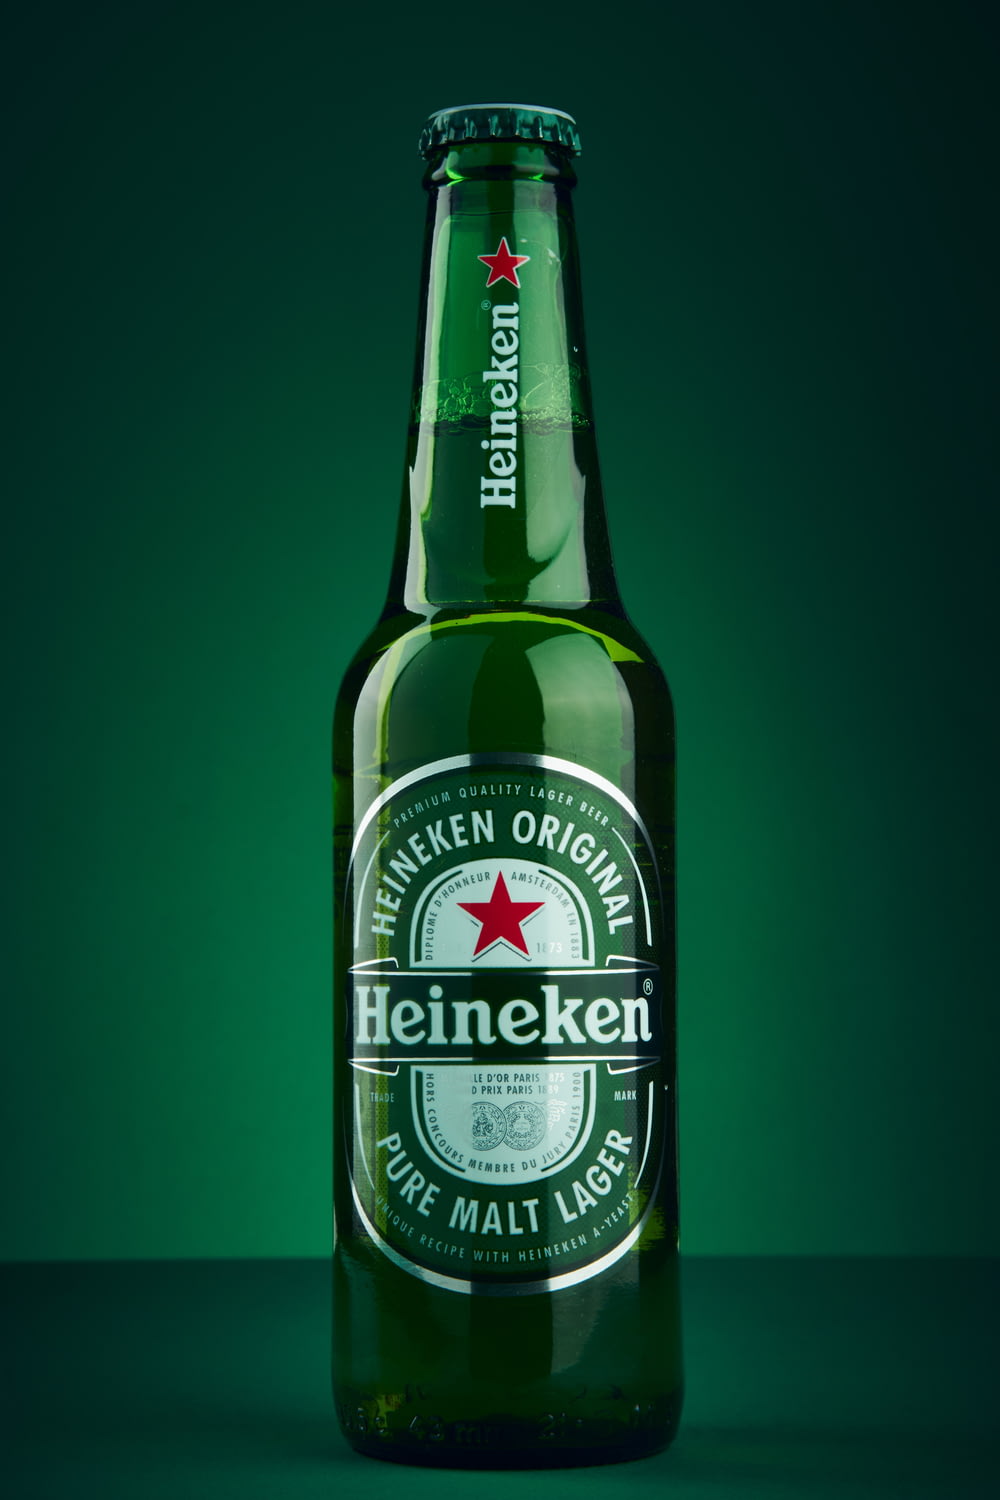 녹색 표면에 하이네켄 맥주병